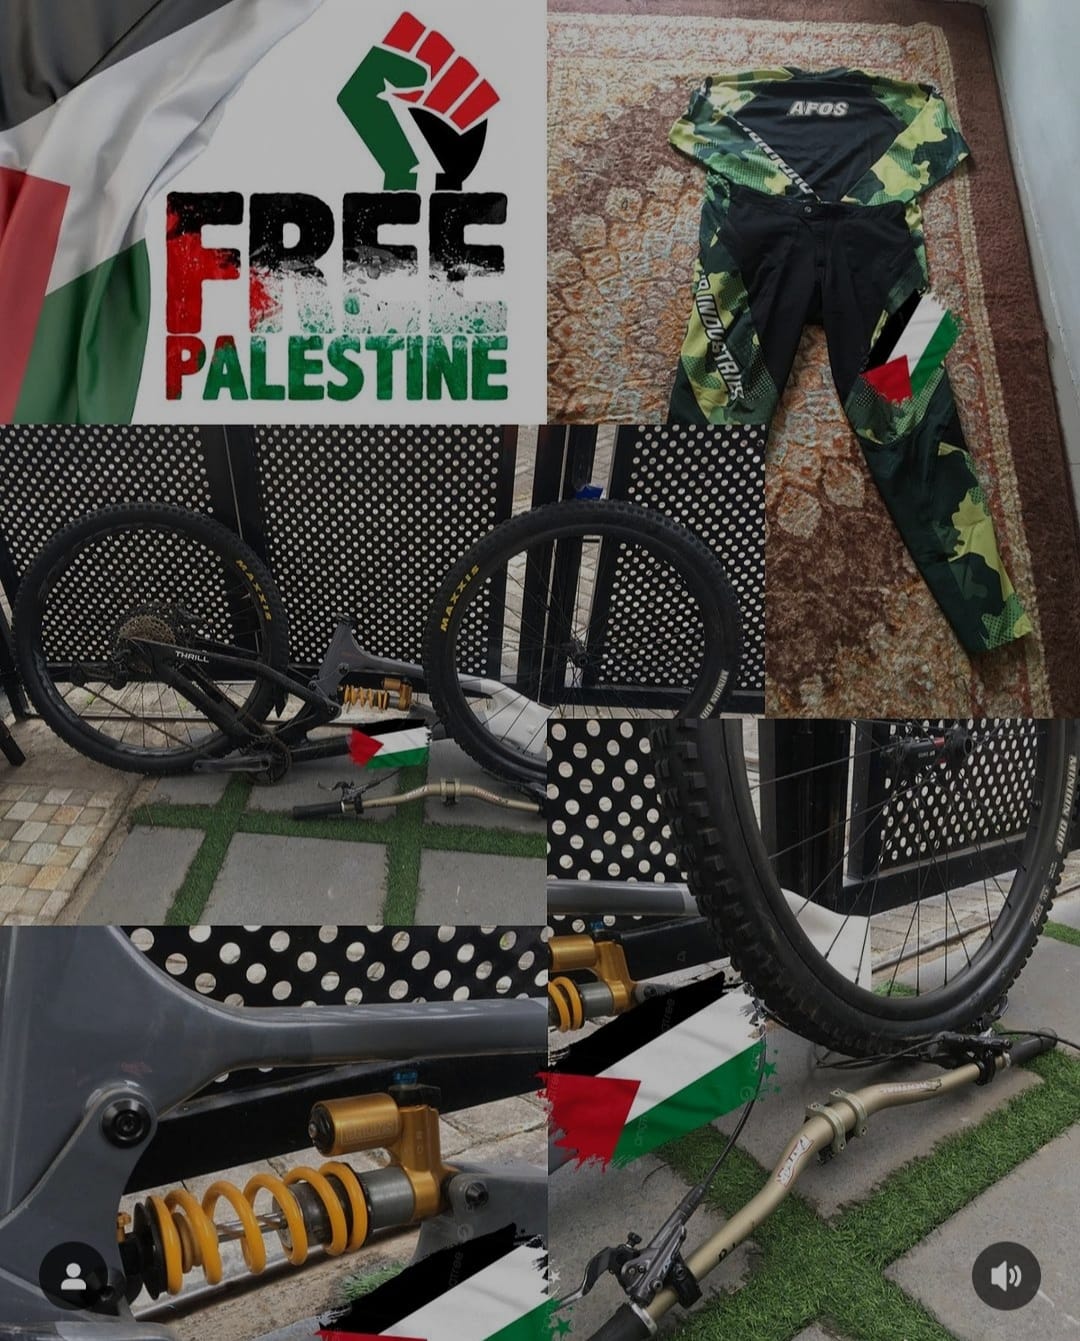 Afos Katana, Atlet Downhill Kota Batu Lelang Sepeda untuk Palestina